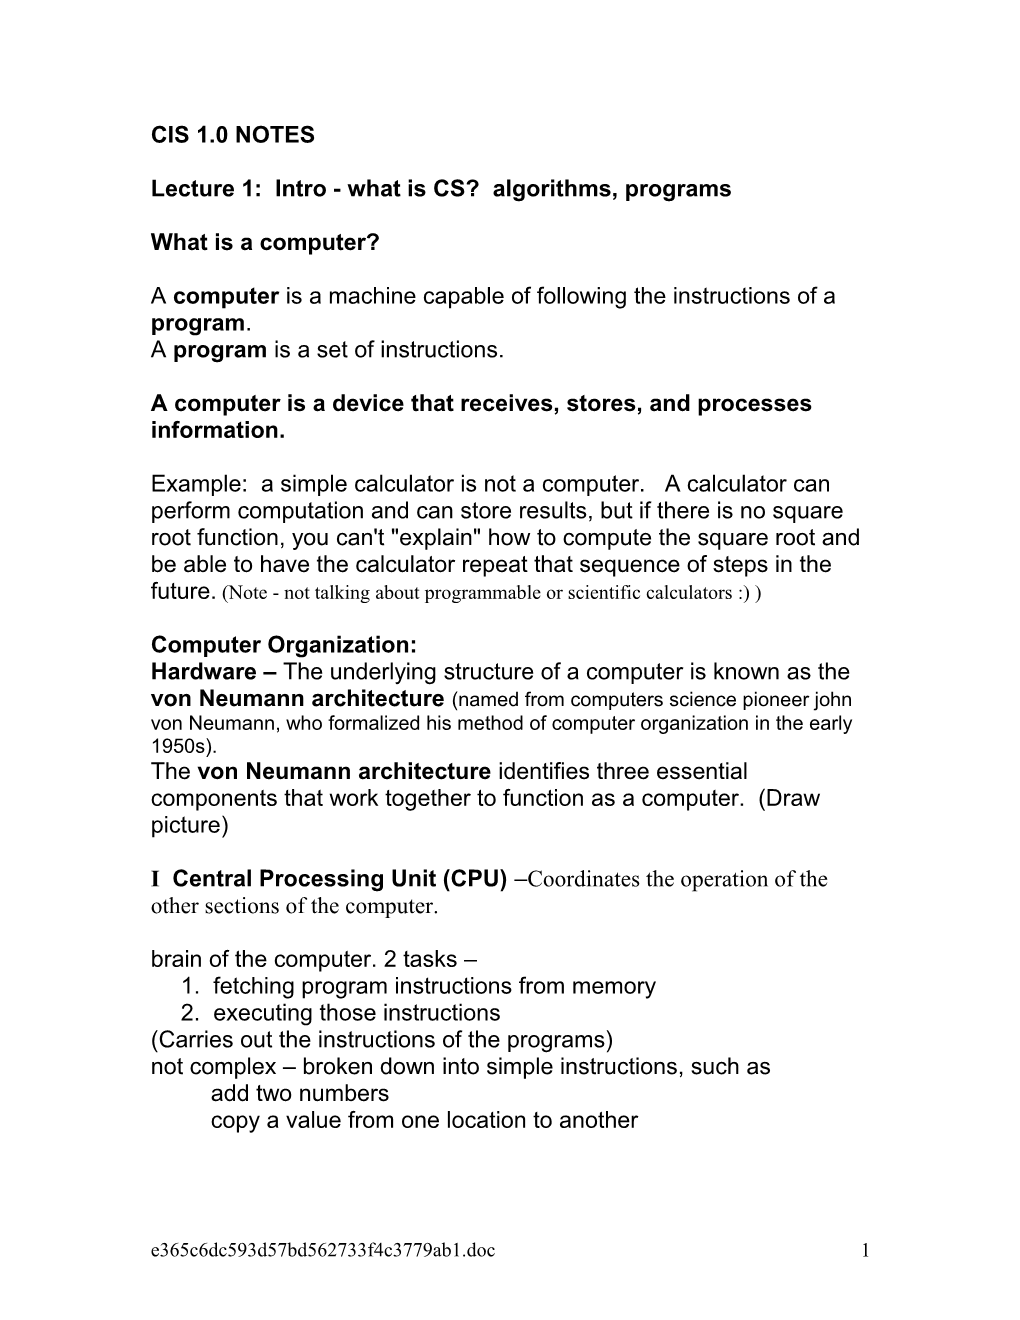 Lecture 1: Intro - What Is CS? Algorithms, Programs